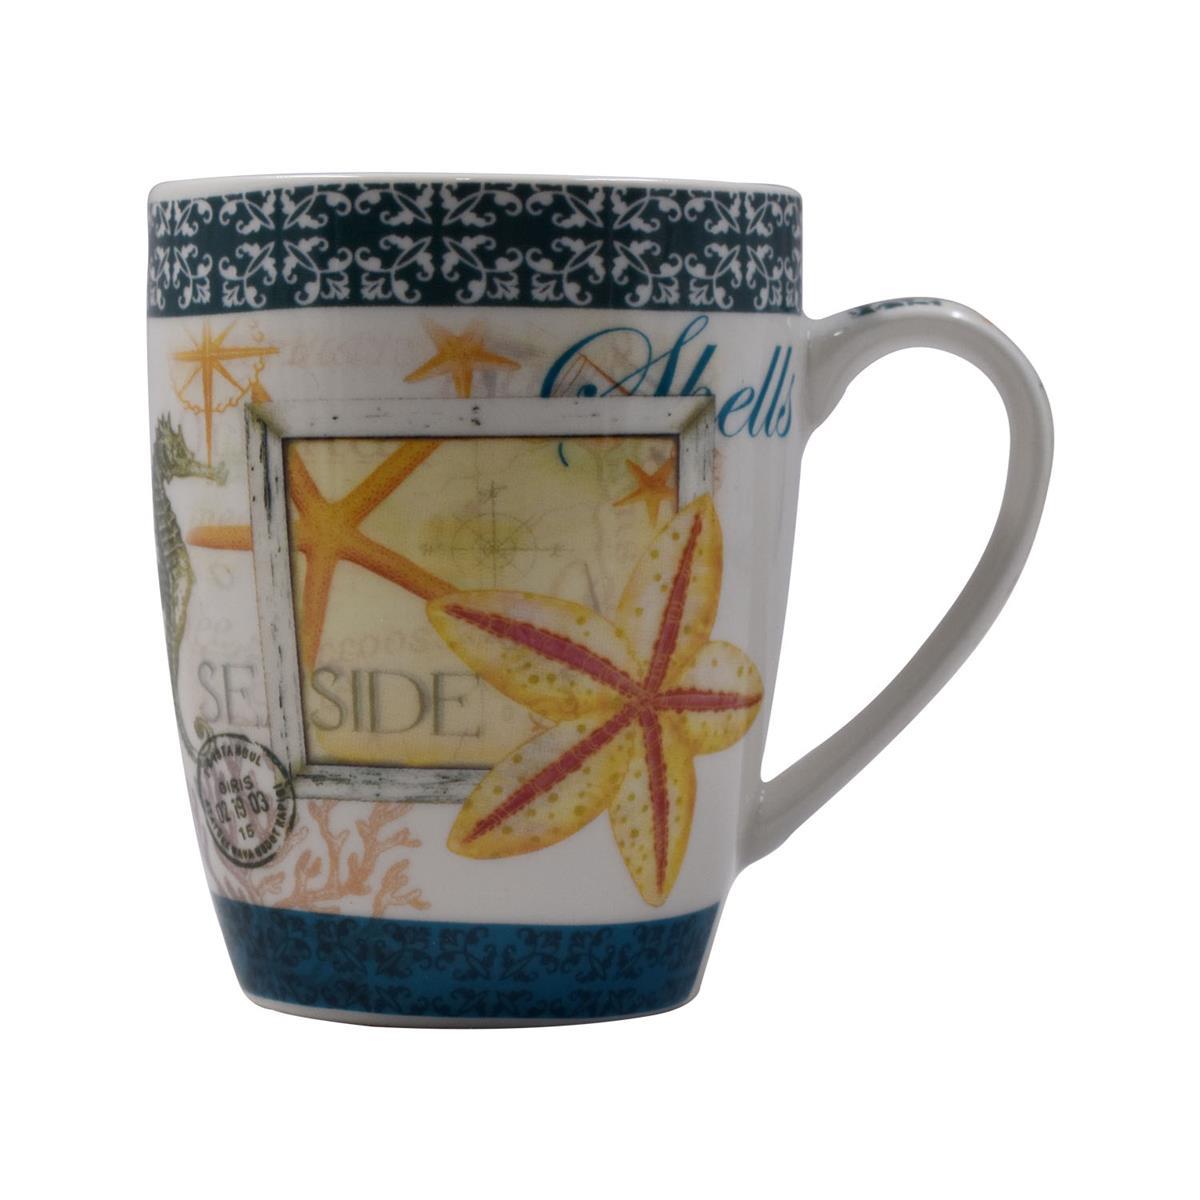 Printed Ceramic Coffee or Tea Mug with handle - 325ml (BPM3403-B)